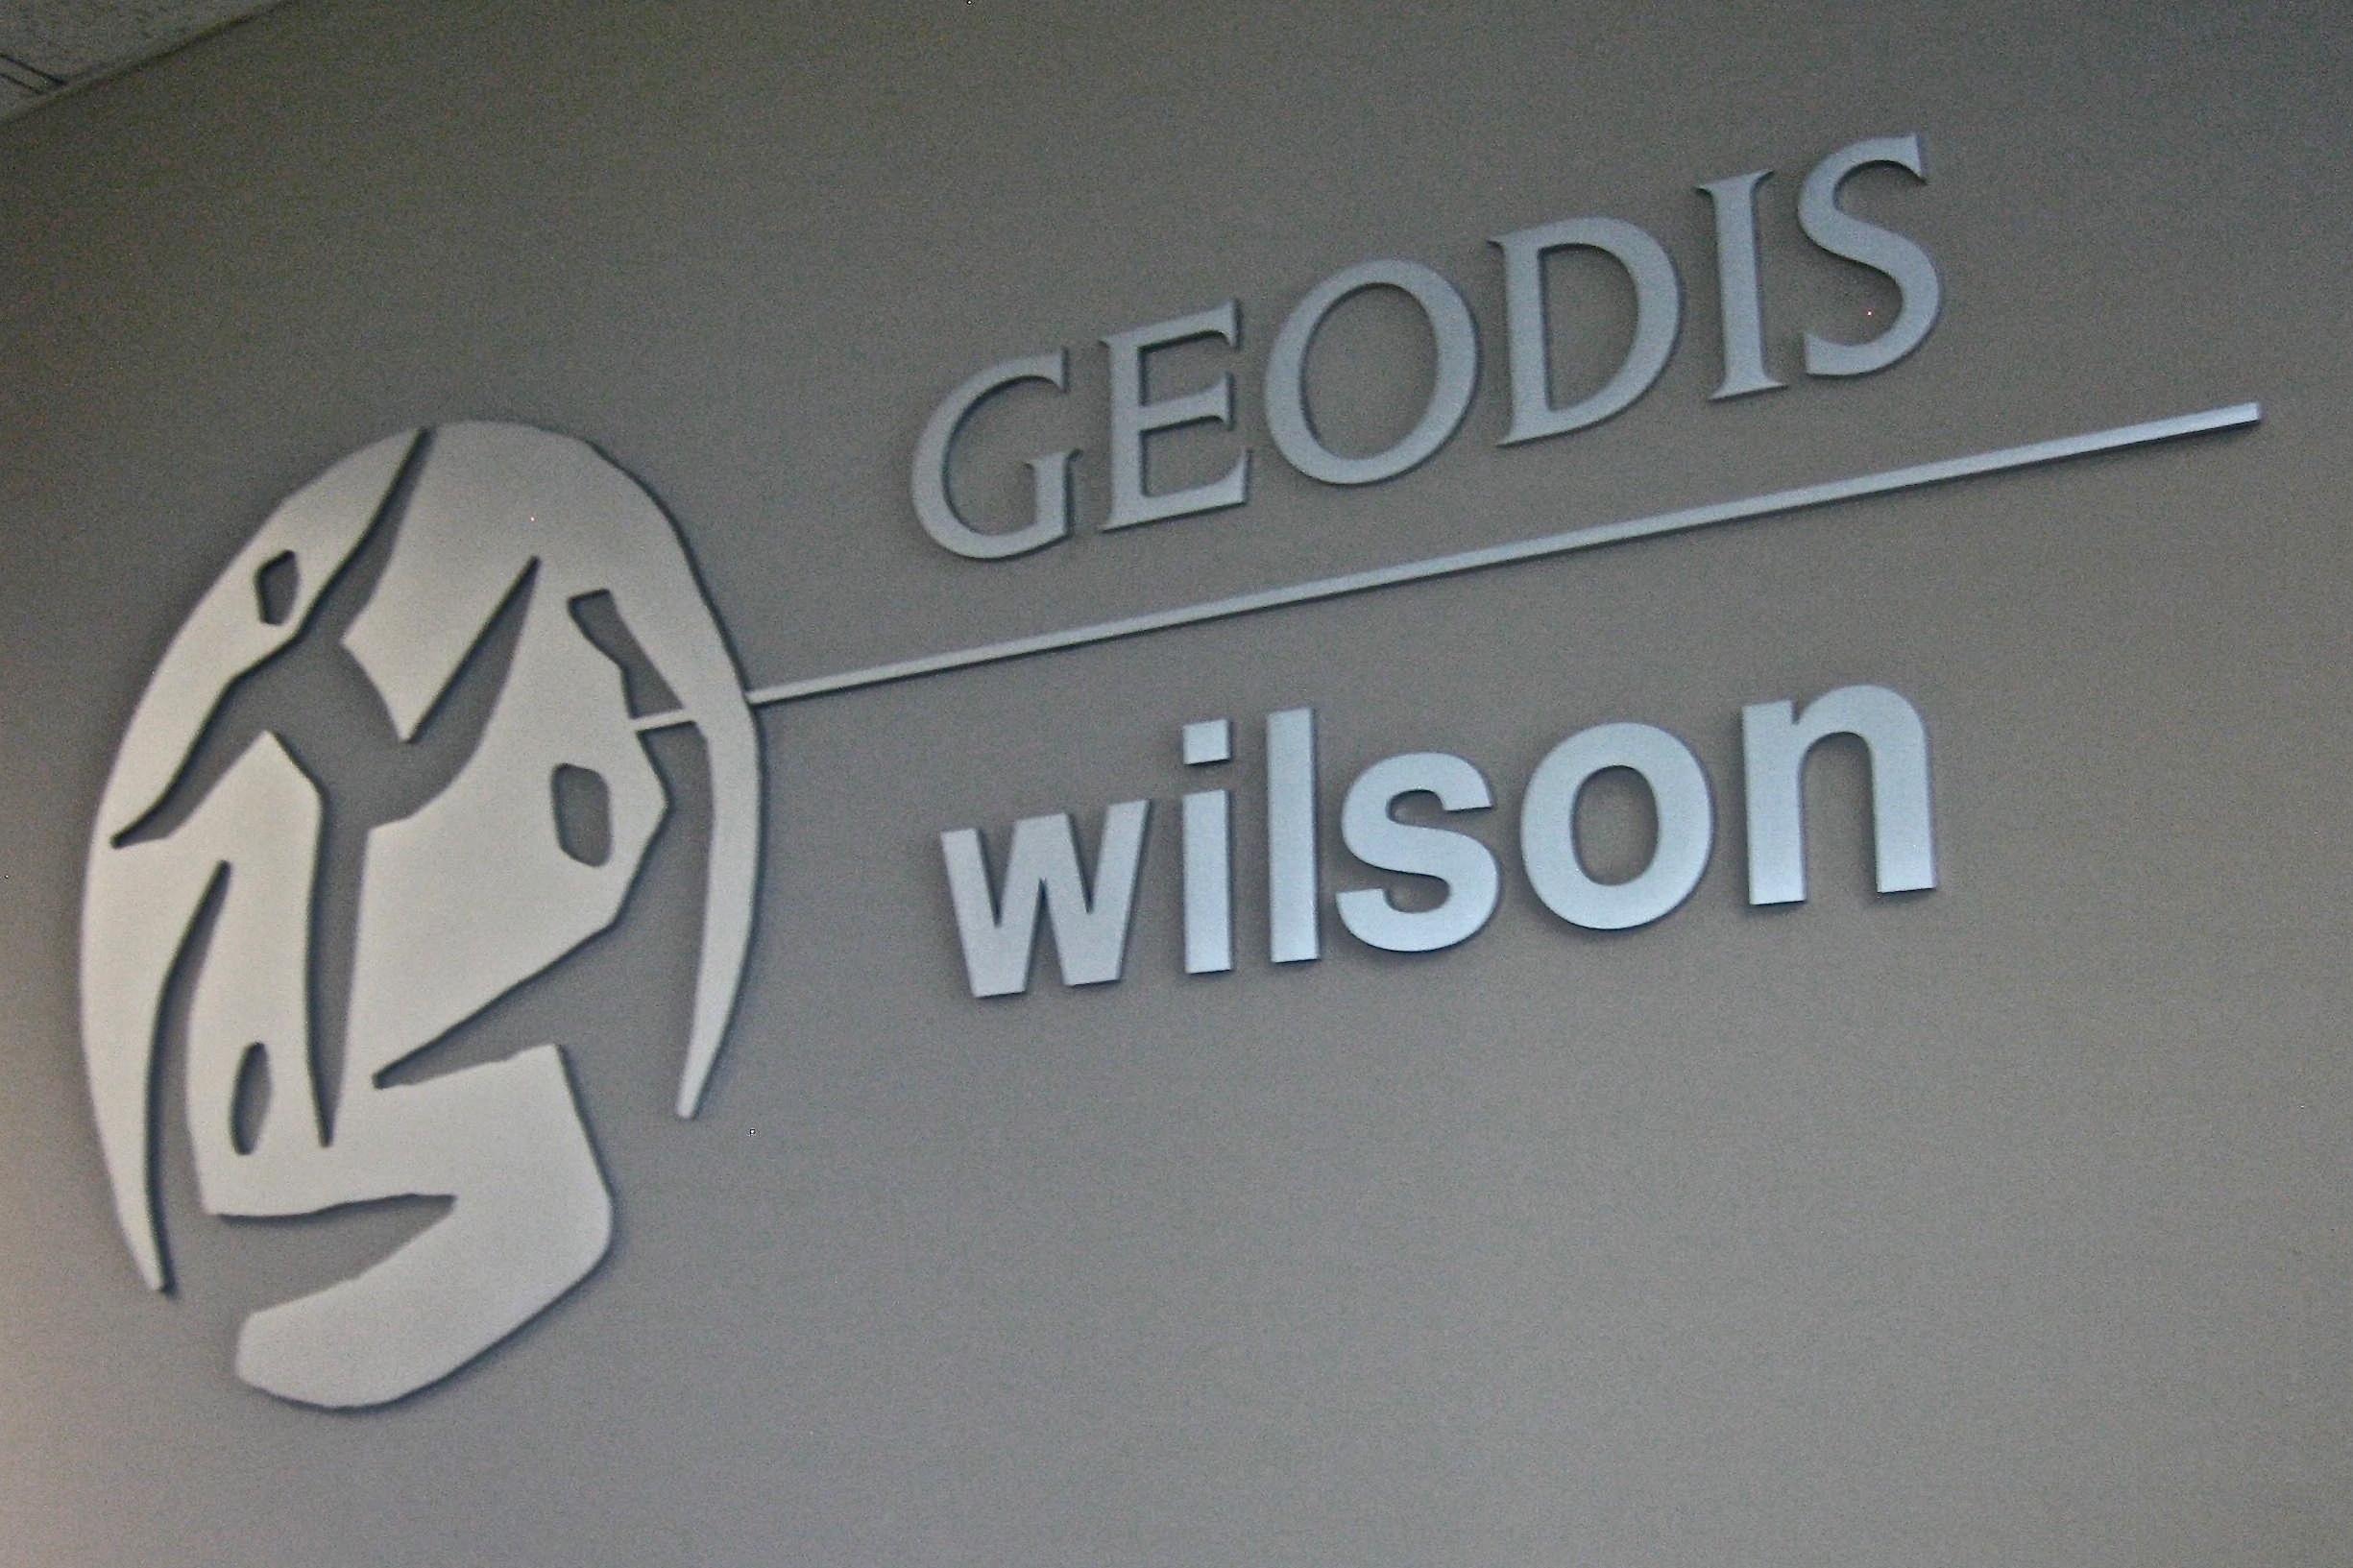 Geodis Wilson reception dimensional logo